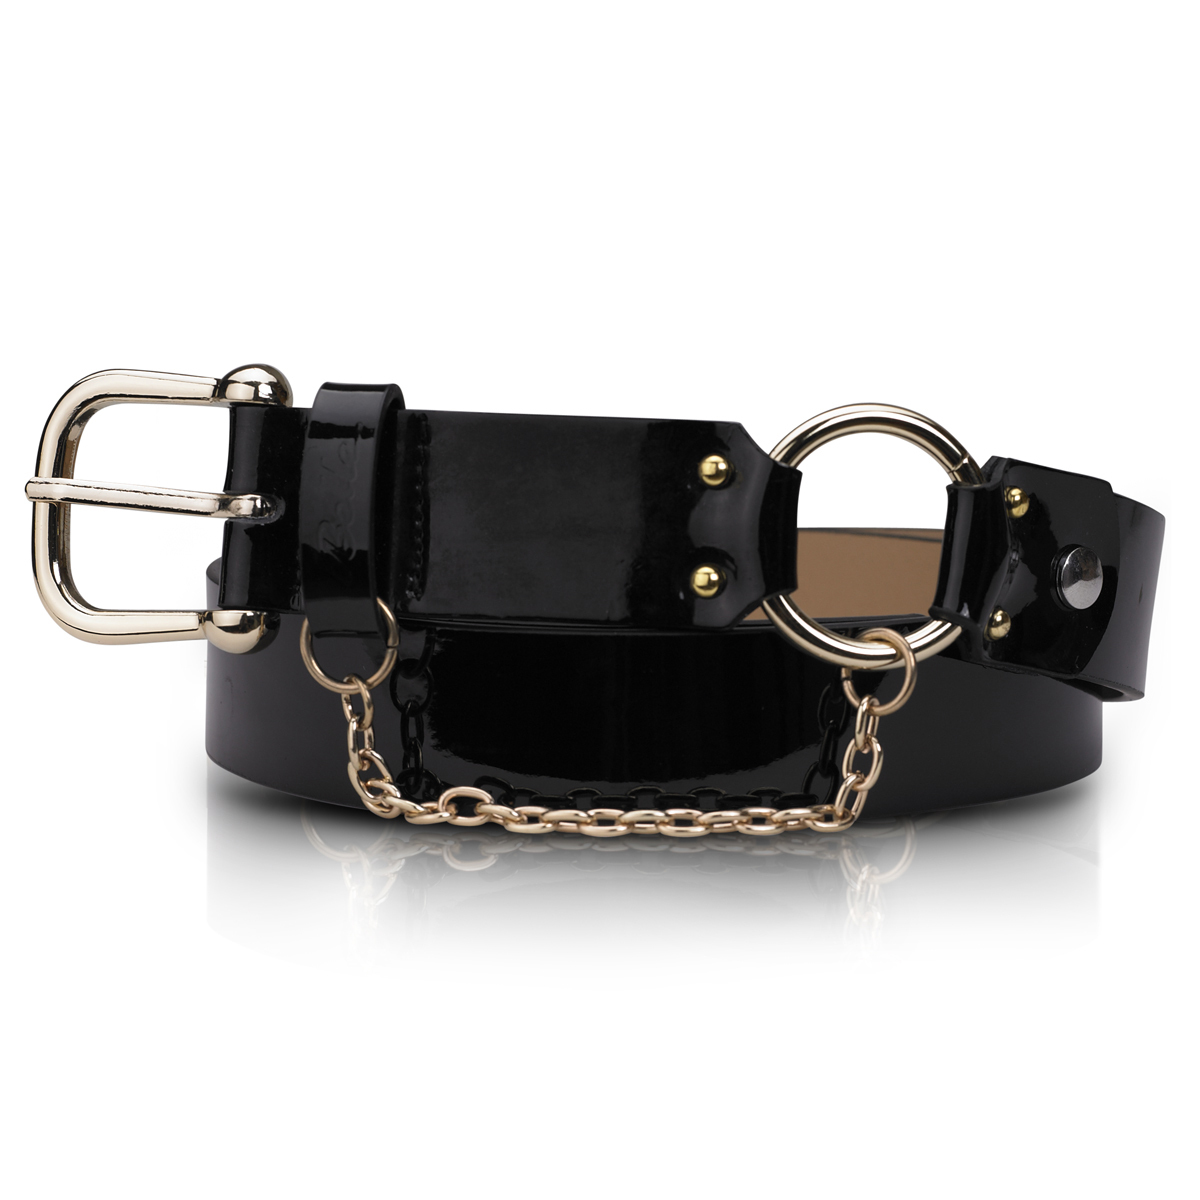 fashion strap women's belt fashion female pin buckle genuine leather cowhide decoration black f0867 100% genuine leather belt